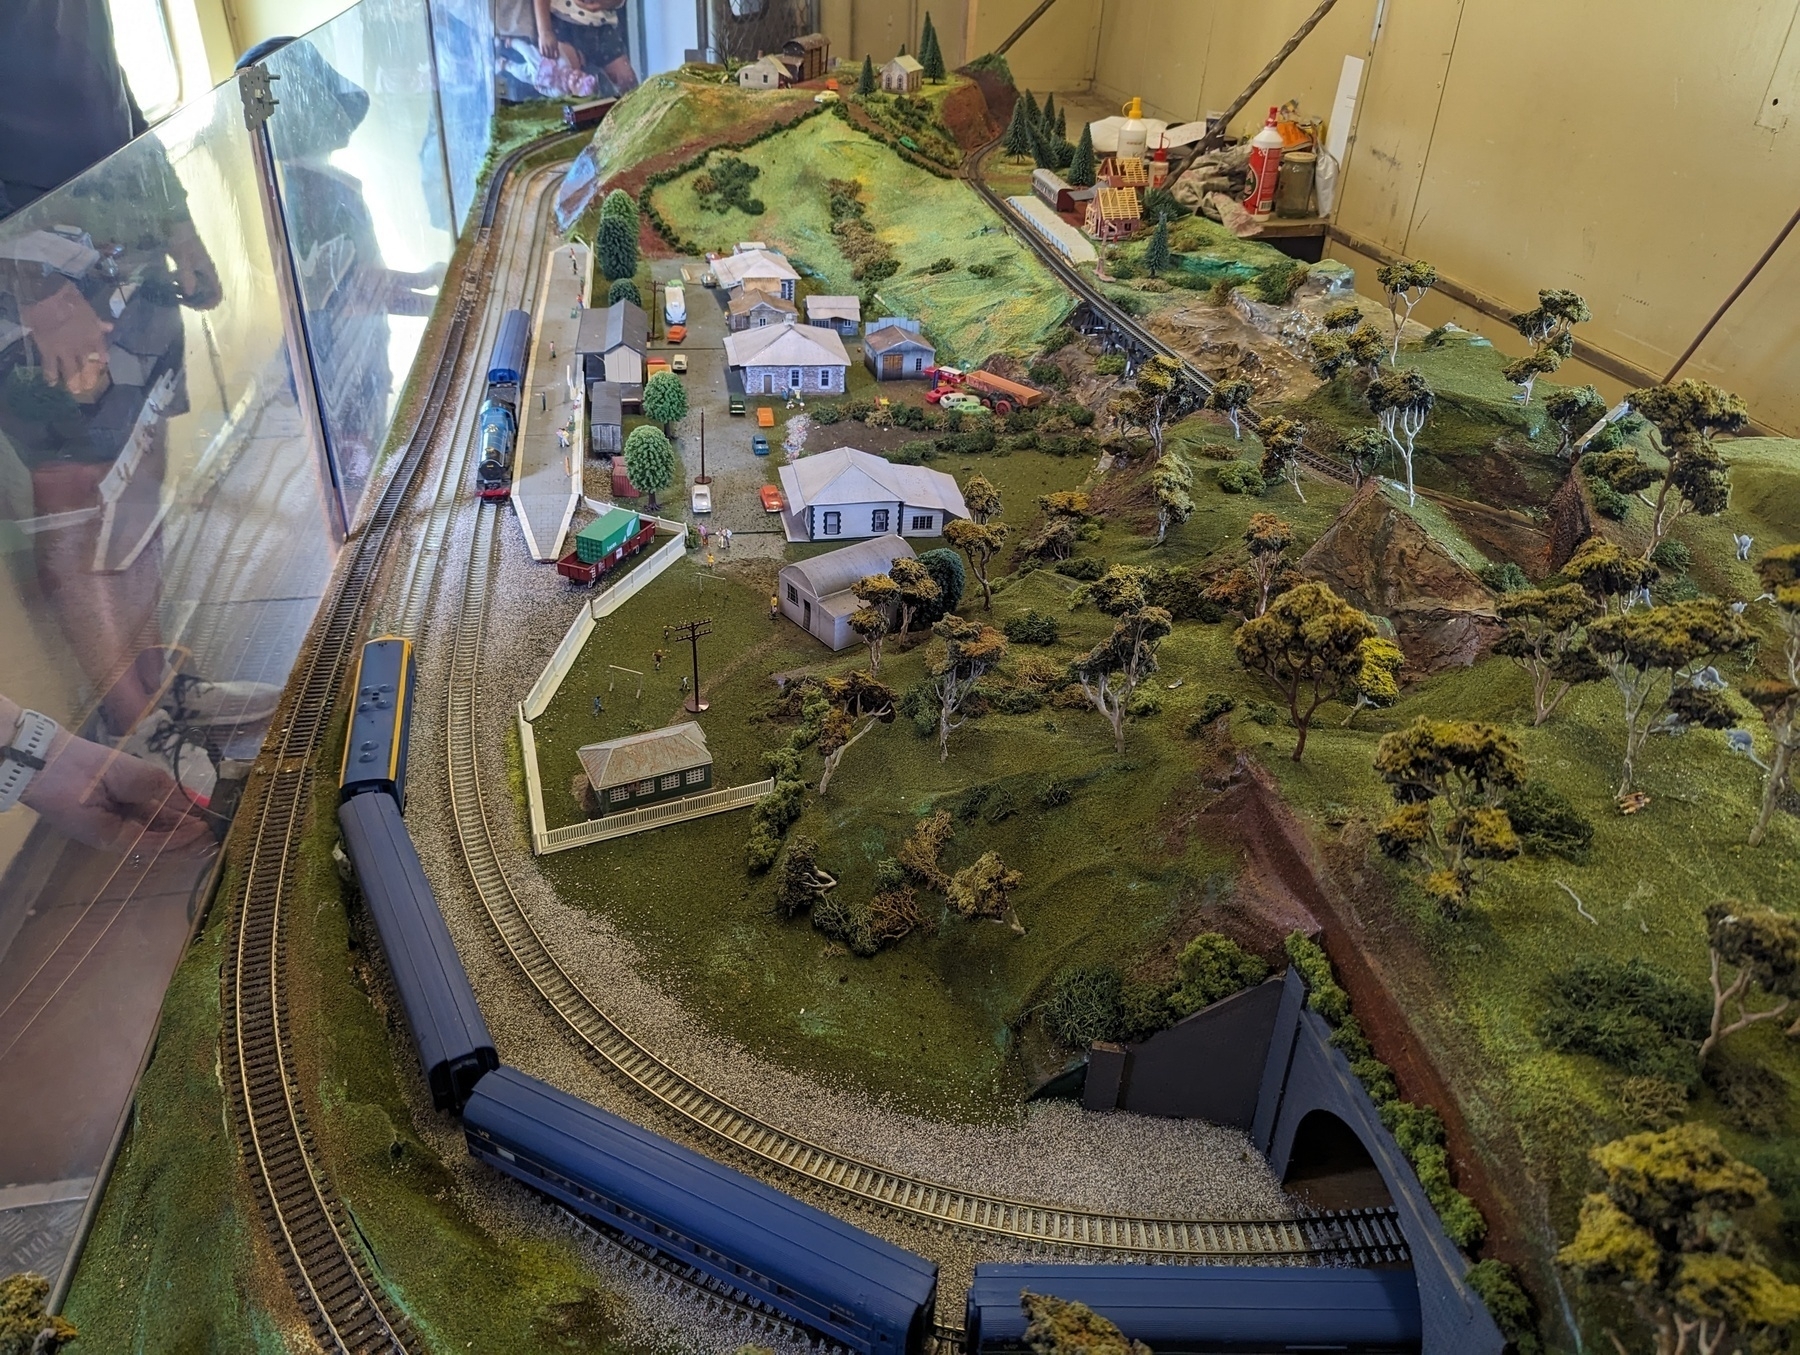 A model train set.